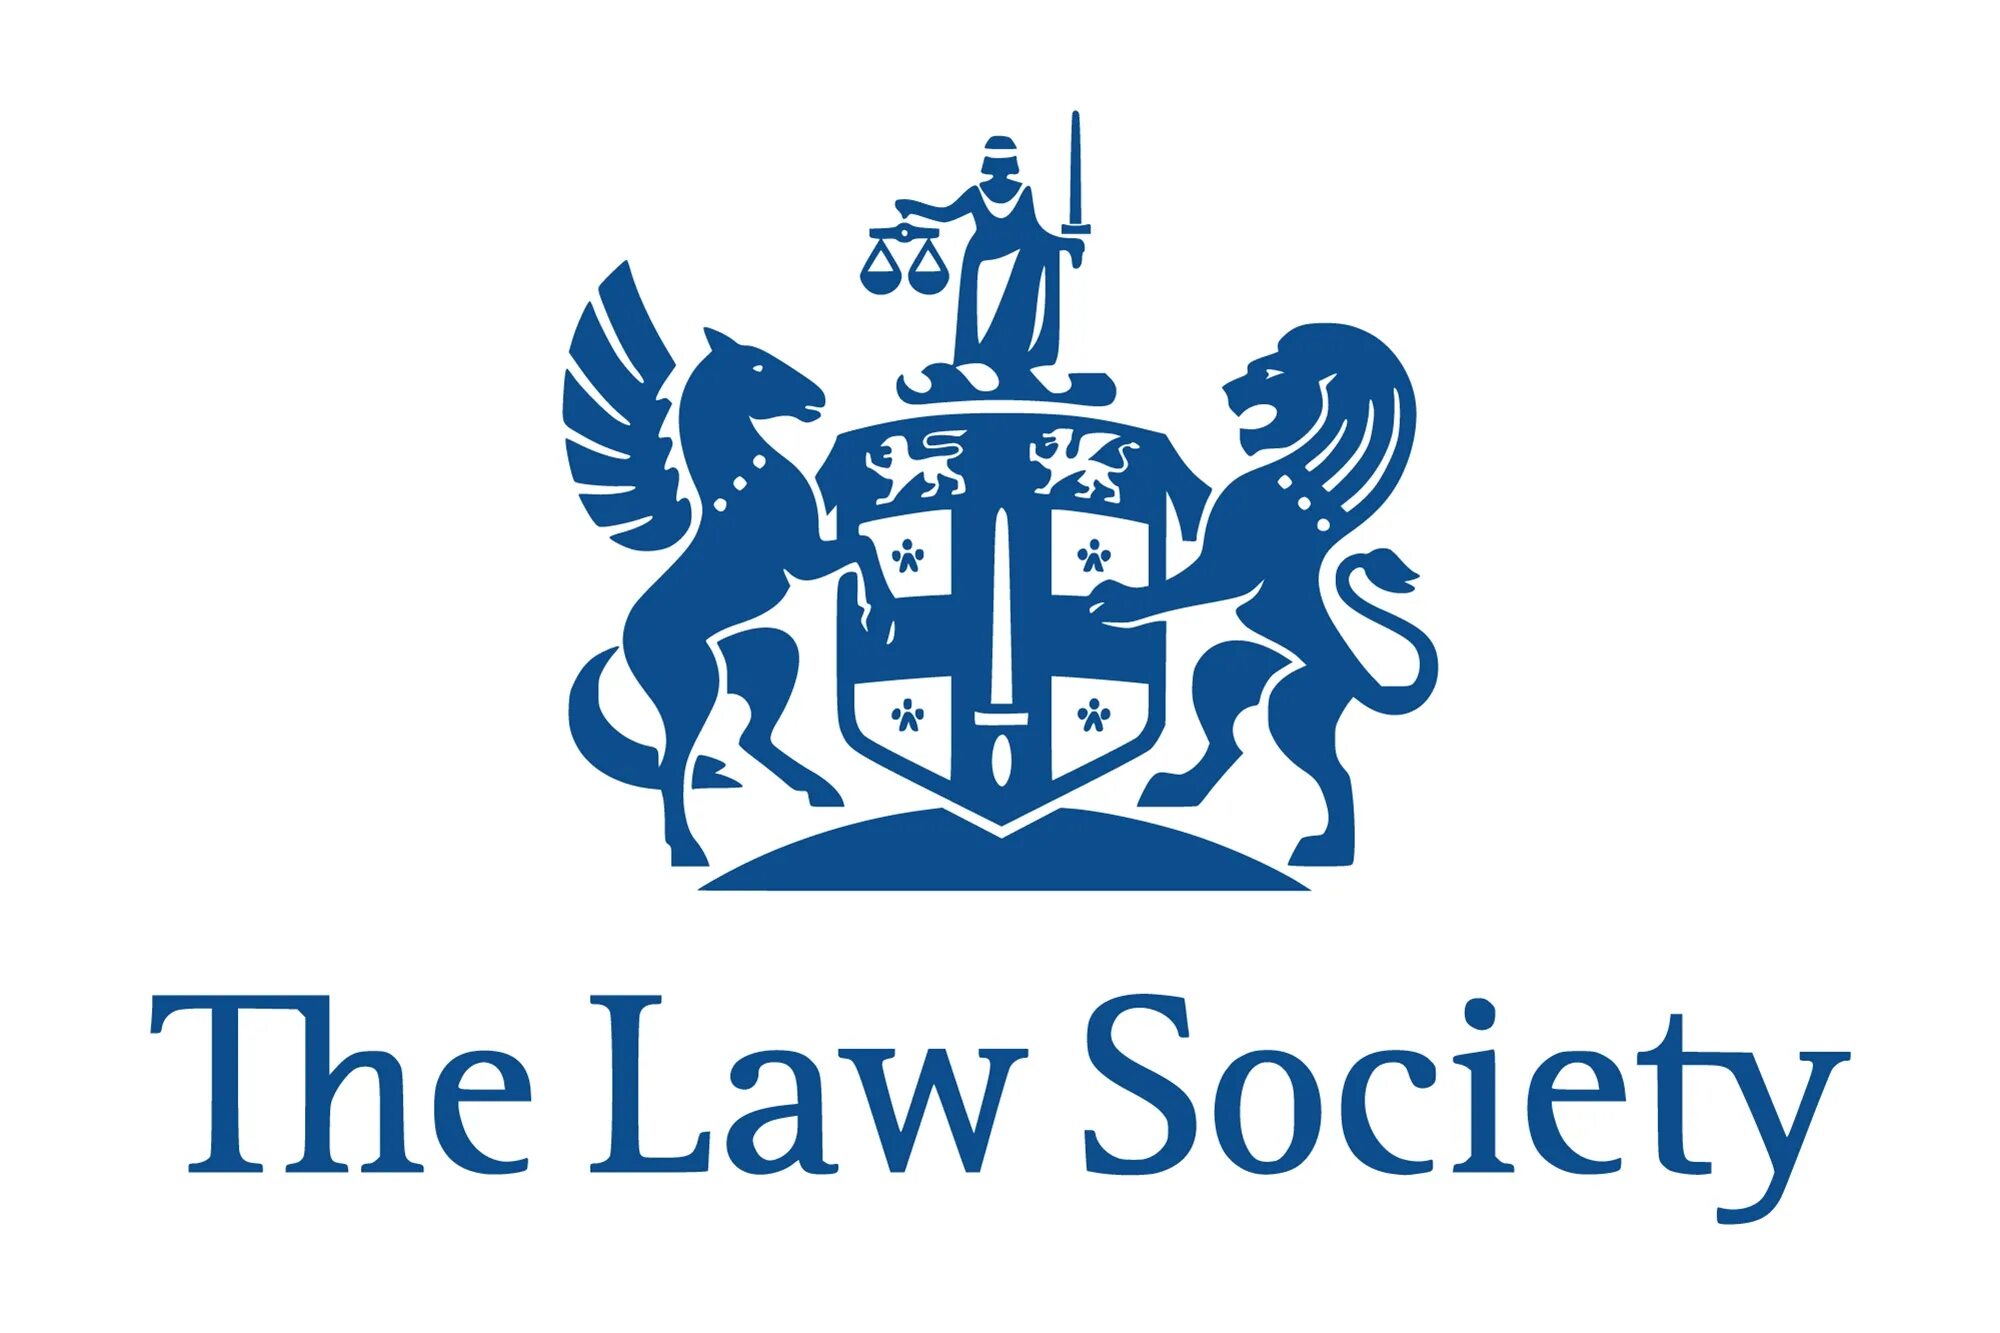 Legal society